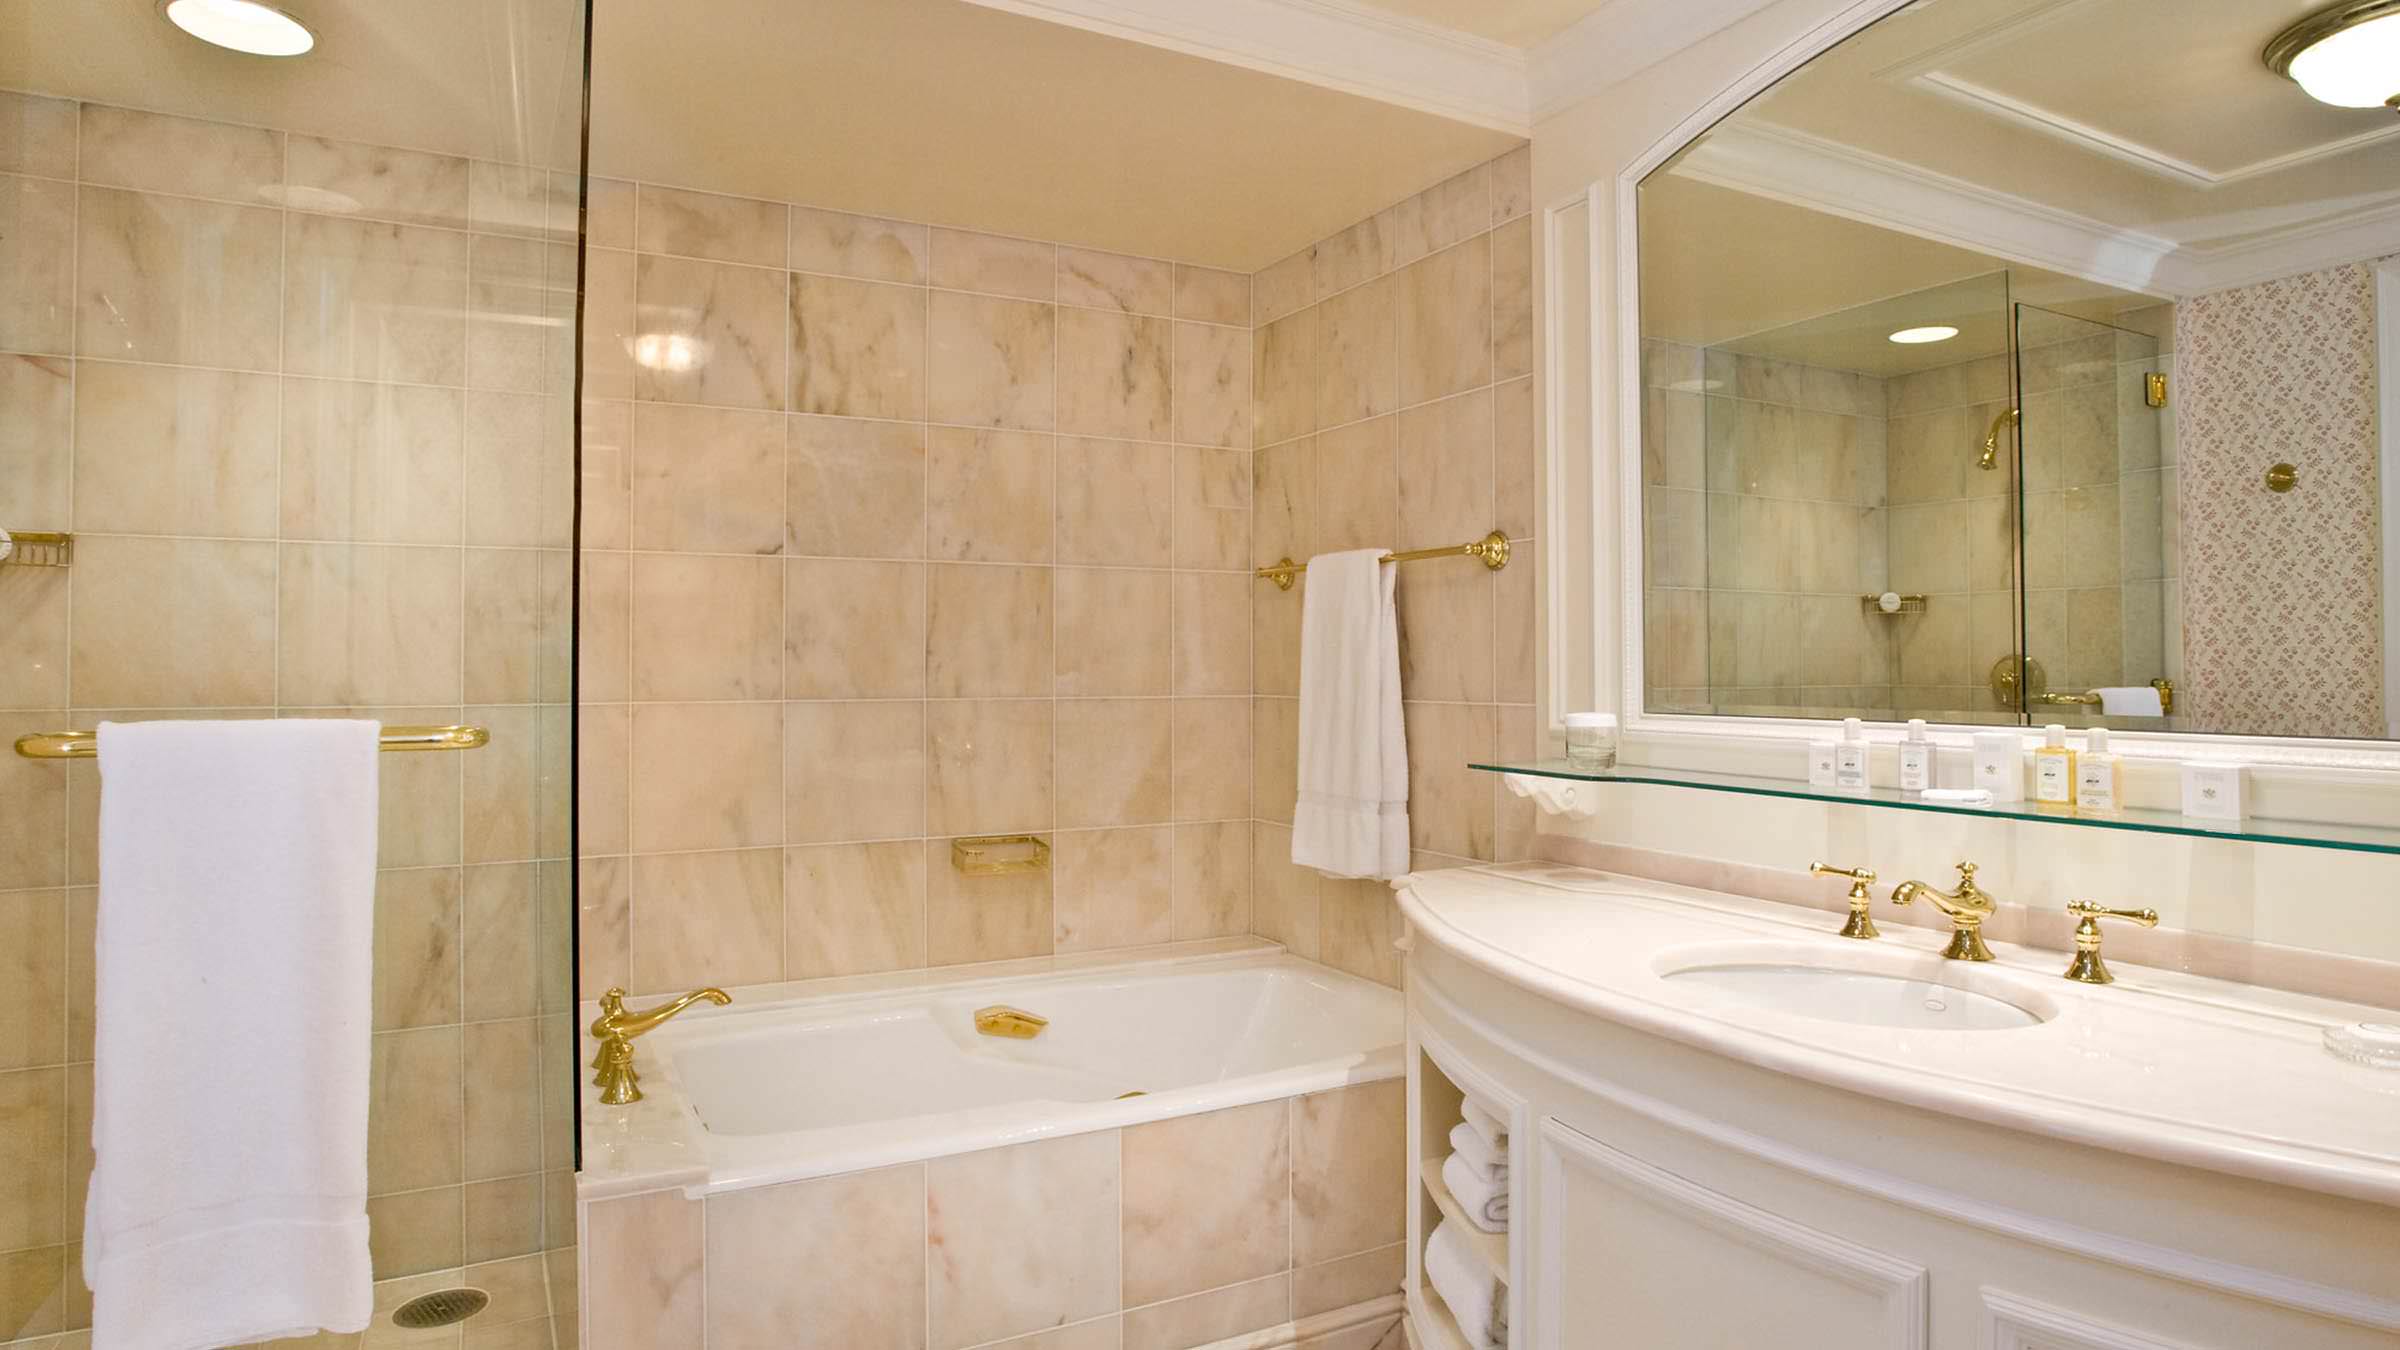 Carrara Italian Marble Guestroom Bathroom at the Grand America Hotel.